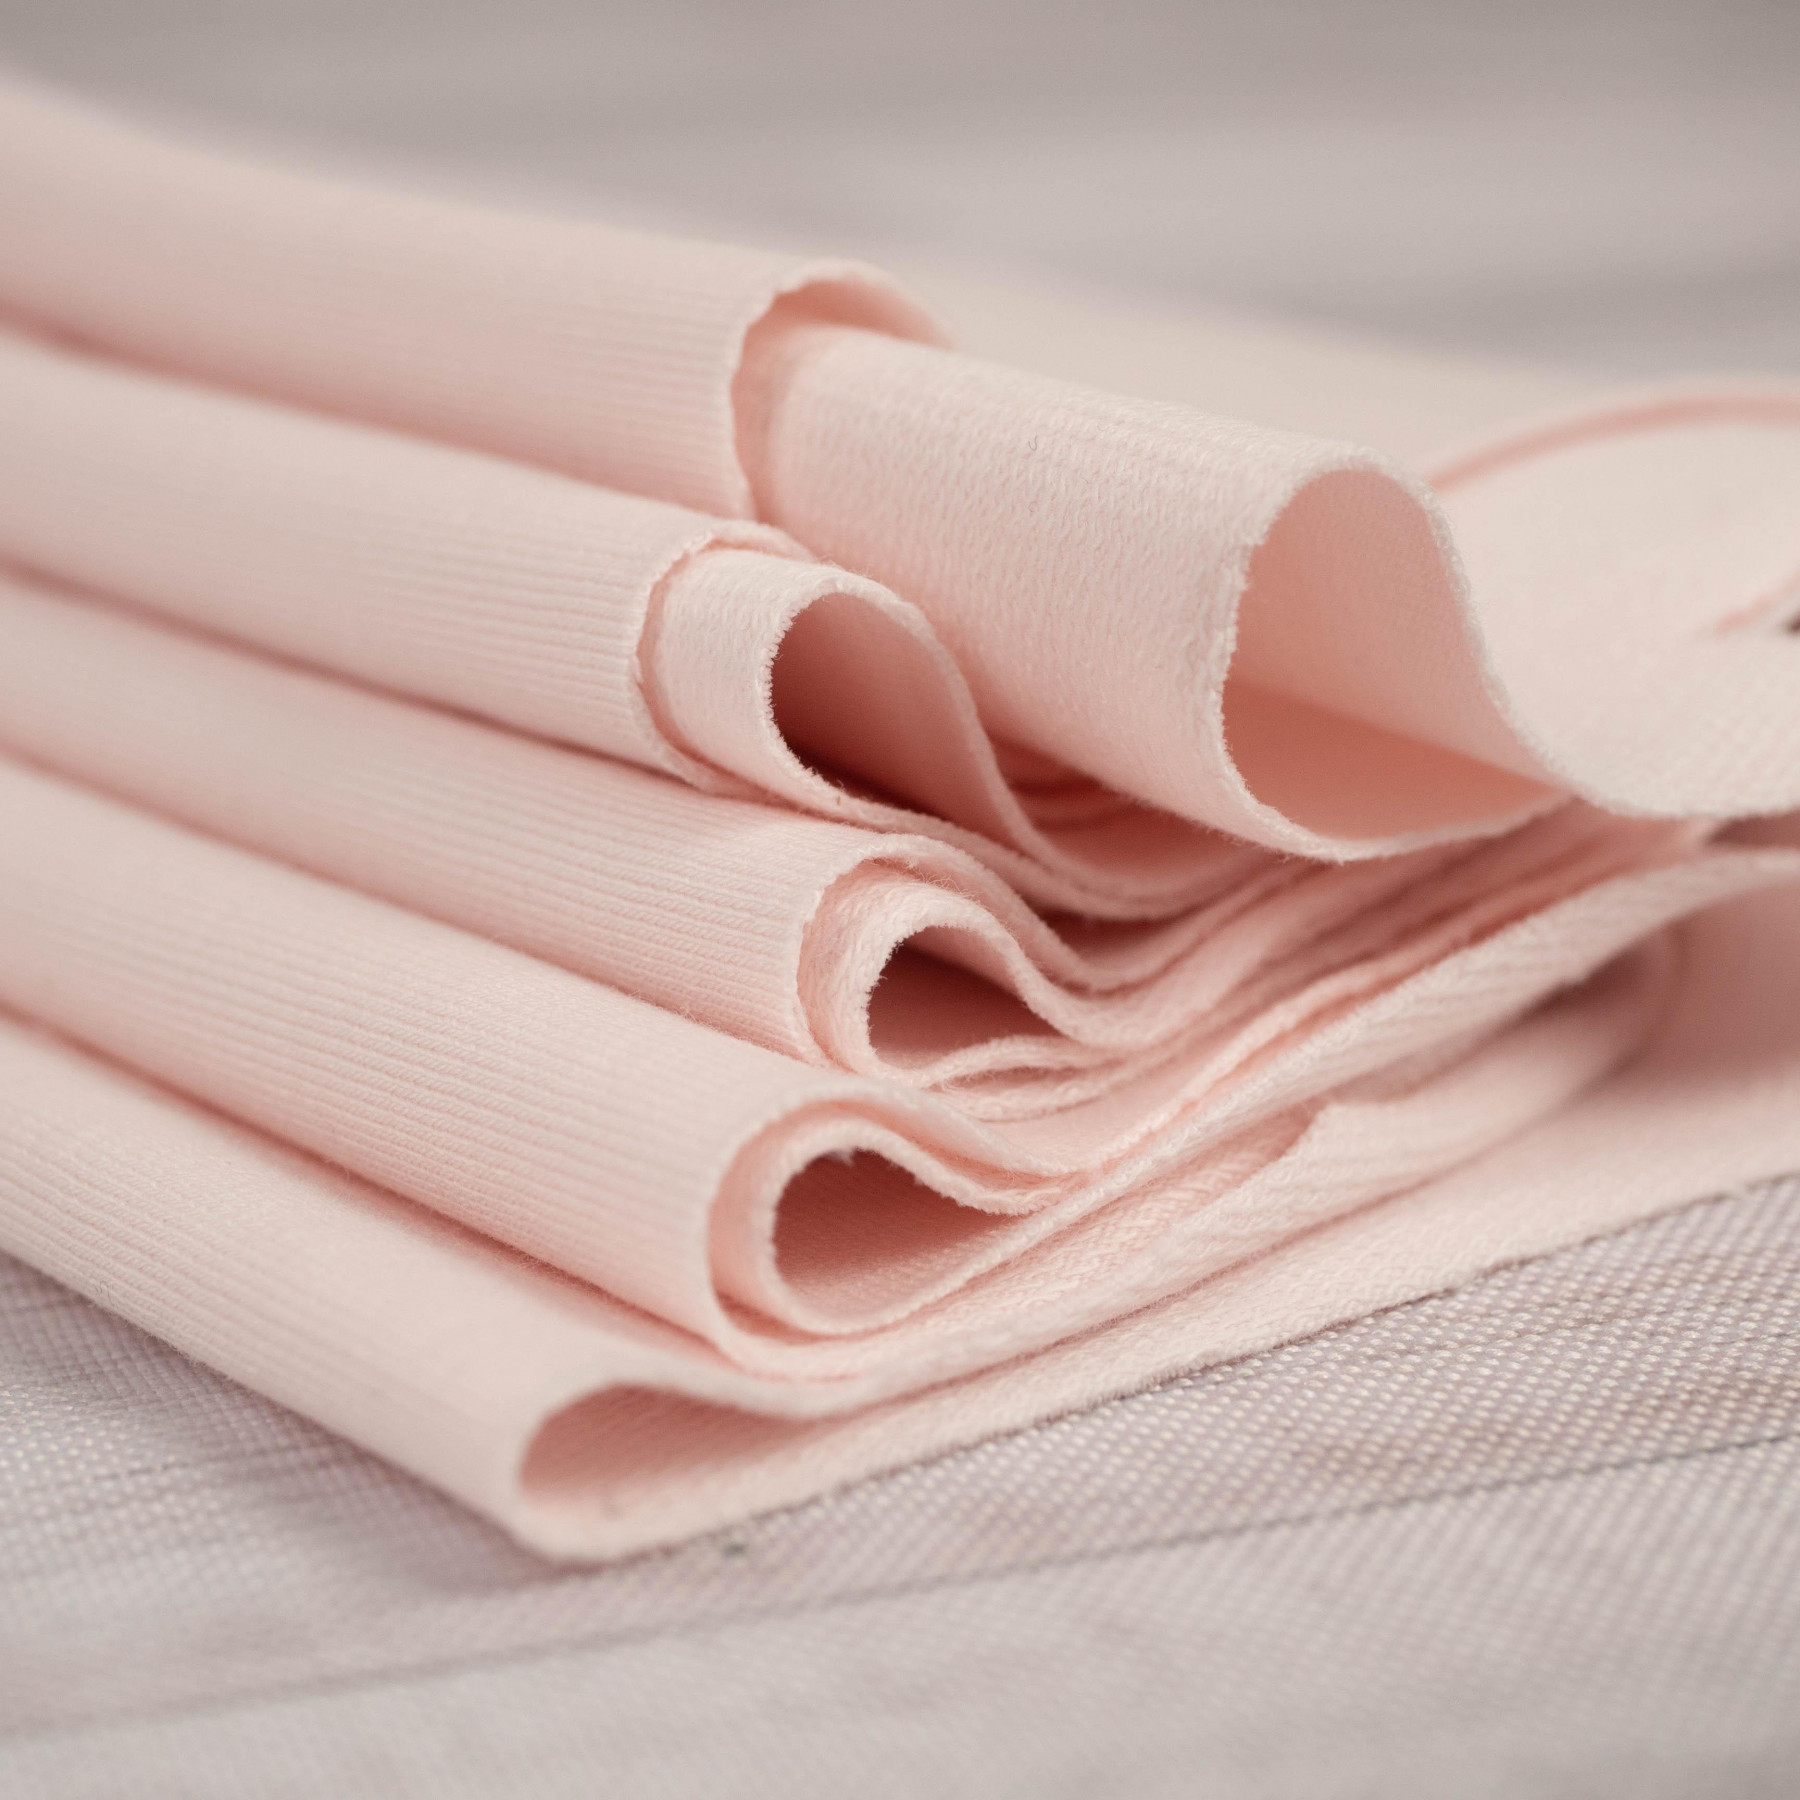 Pale pink - looped knitwear with elastan